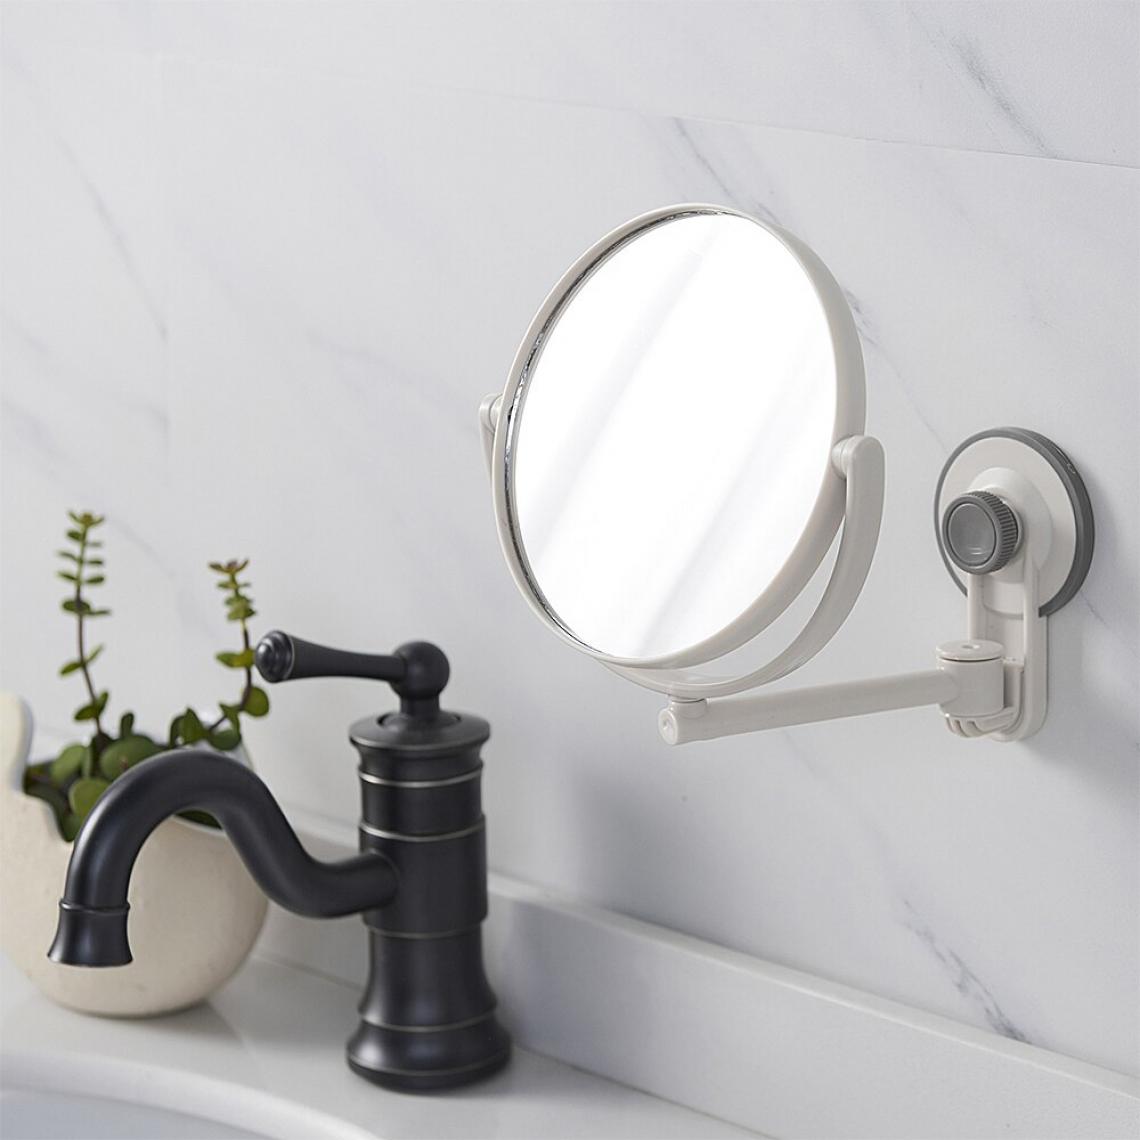 Universal - Miroir de maquillage mural double face léger réglable rotatif imperméable miroir de maquillage perforé gratuit | miroir de bain(Beige) - Miroir de salle de bain